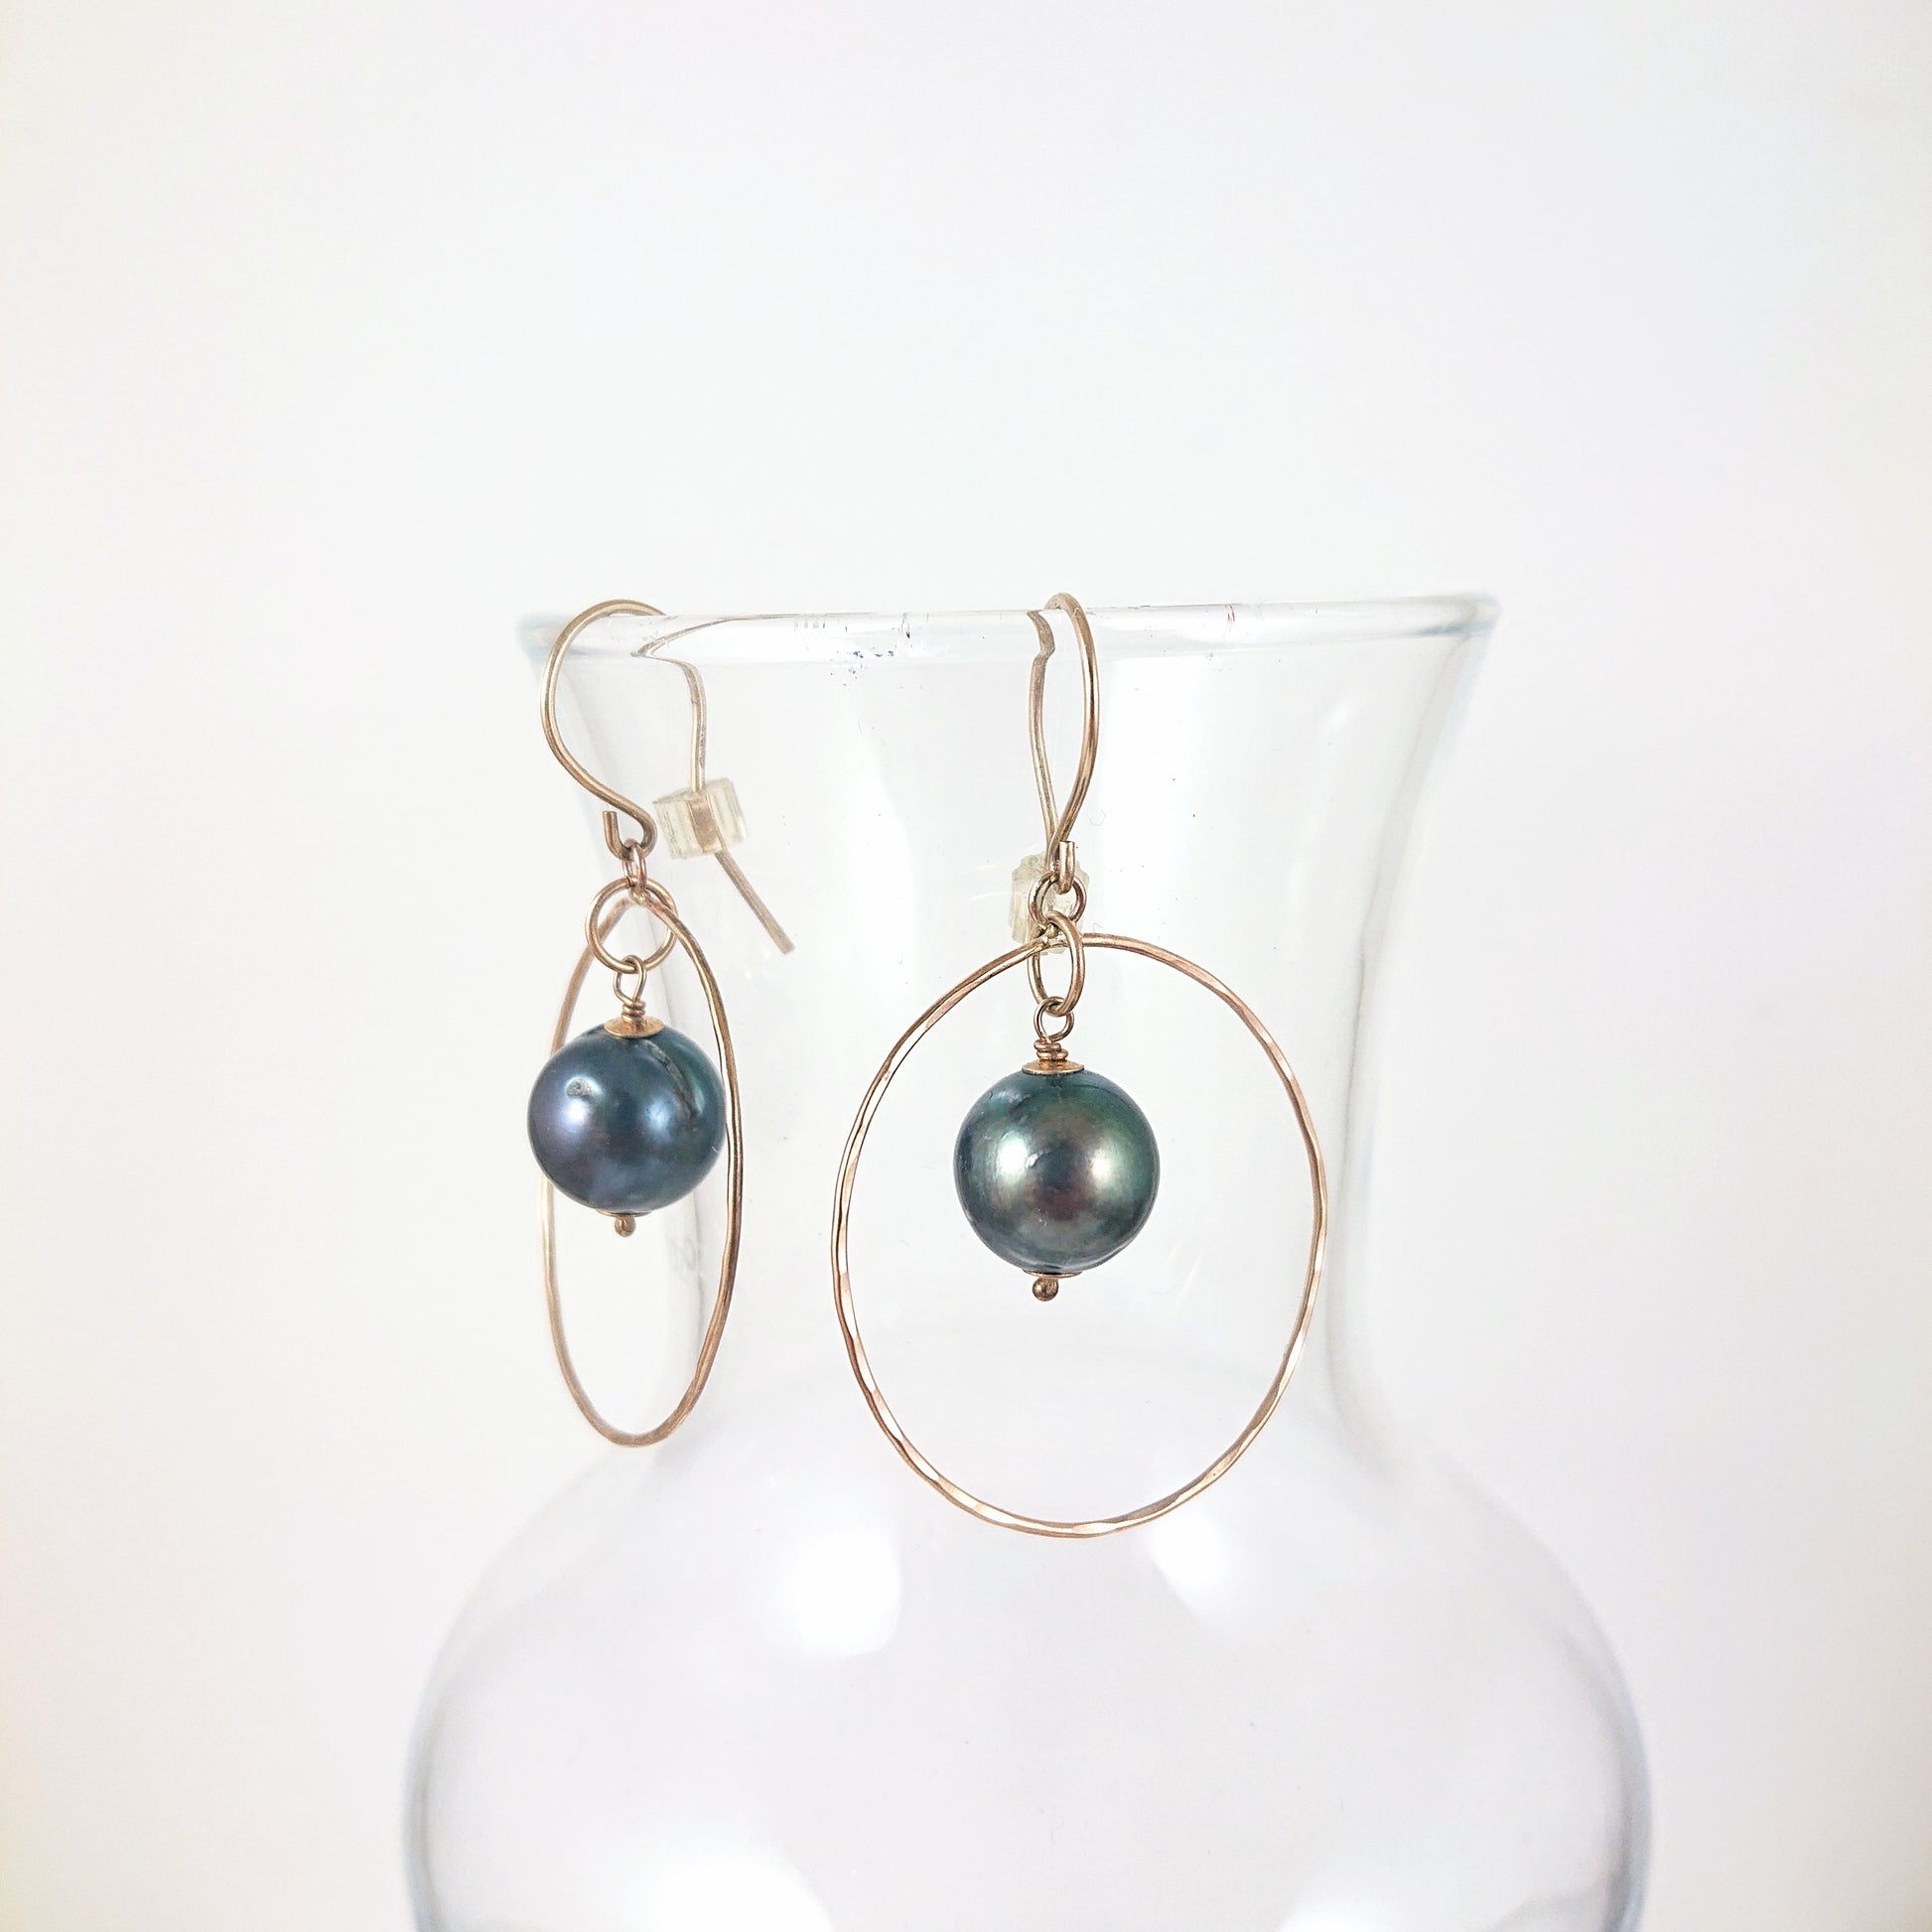 9ct Gold and Pearl Earrings - Karen Morrison Jewellery